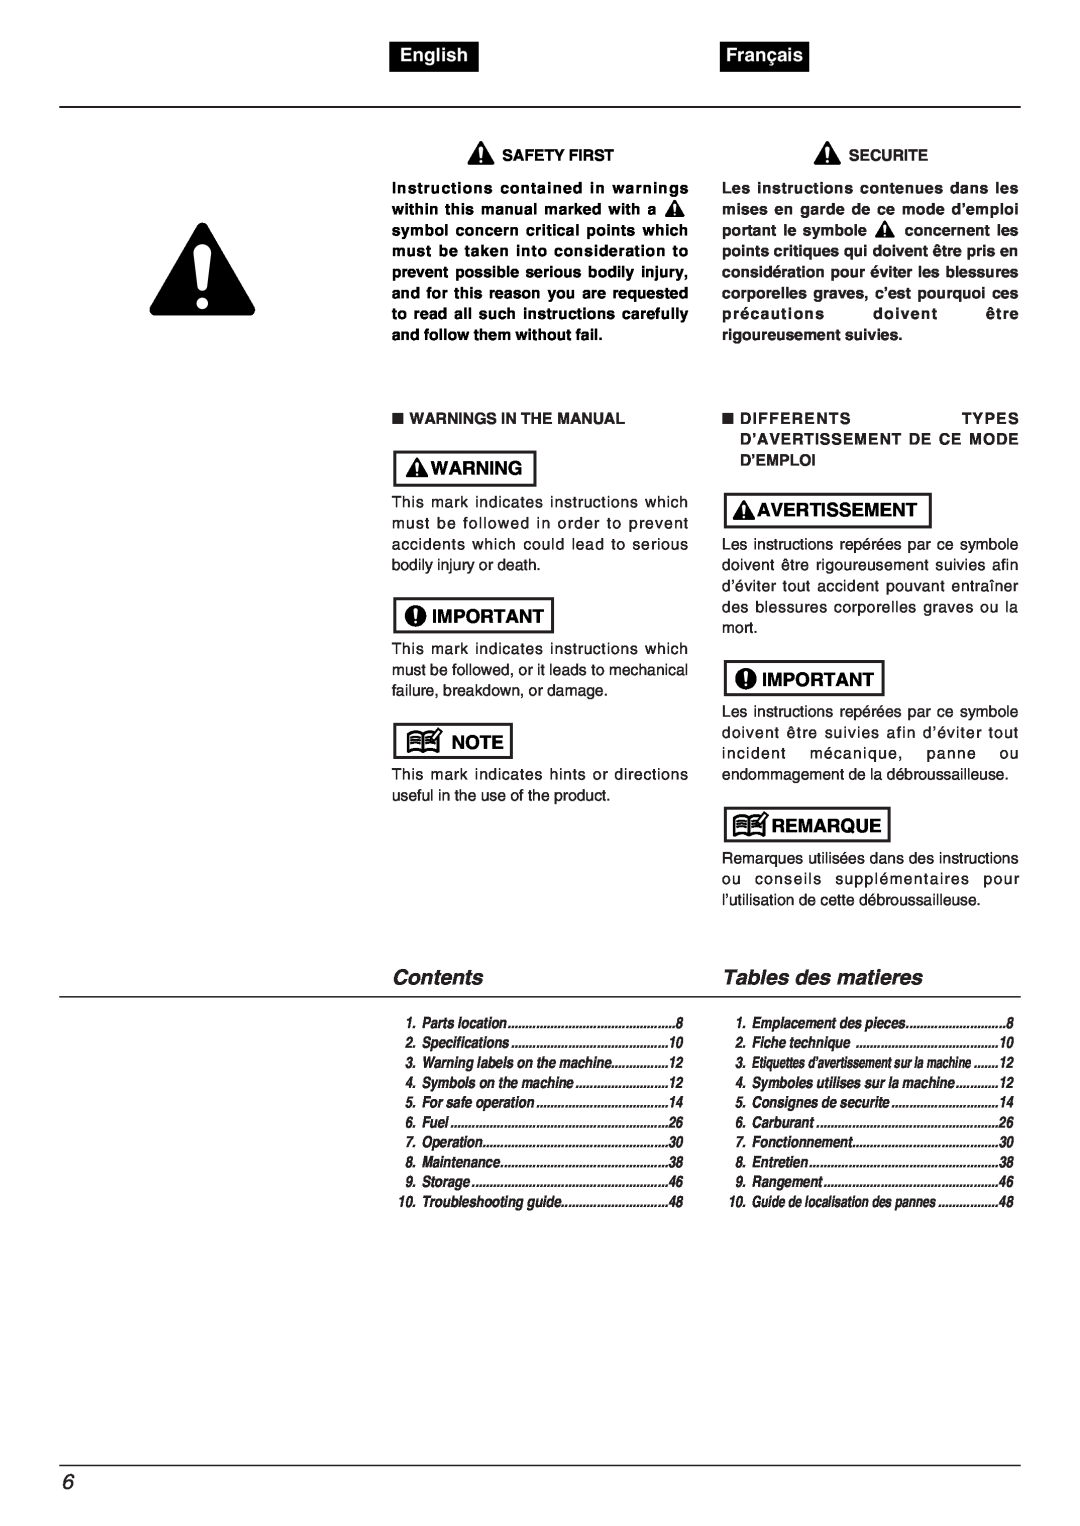 Zenoah BC2000 manual Contents, Tables des matieres, English, Français, Avertissement, Remarque 